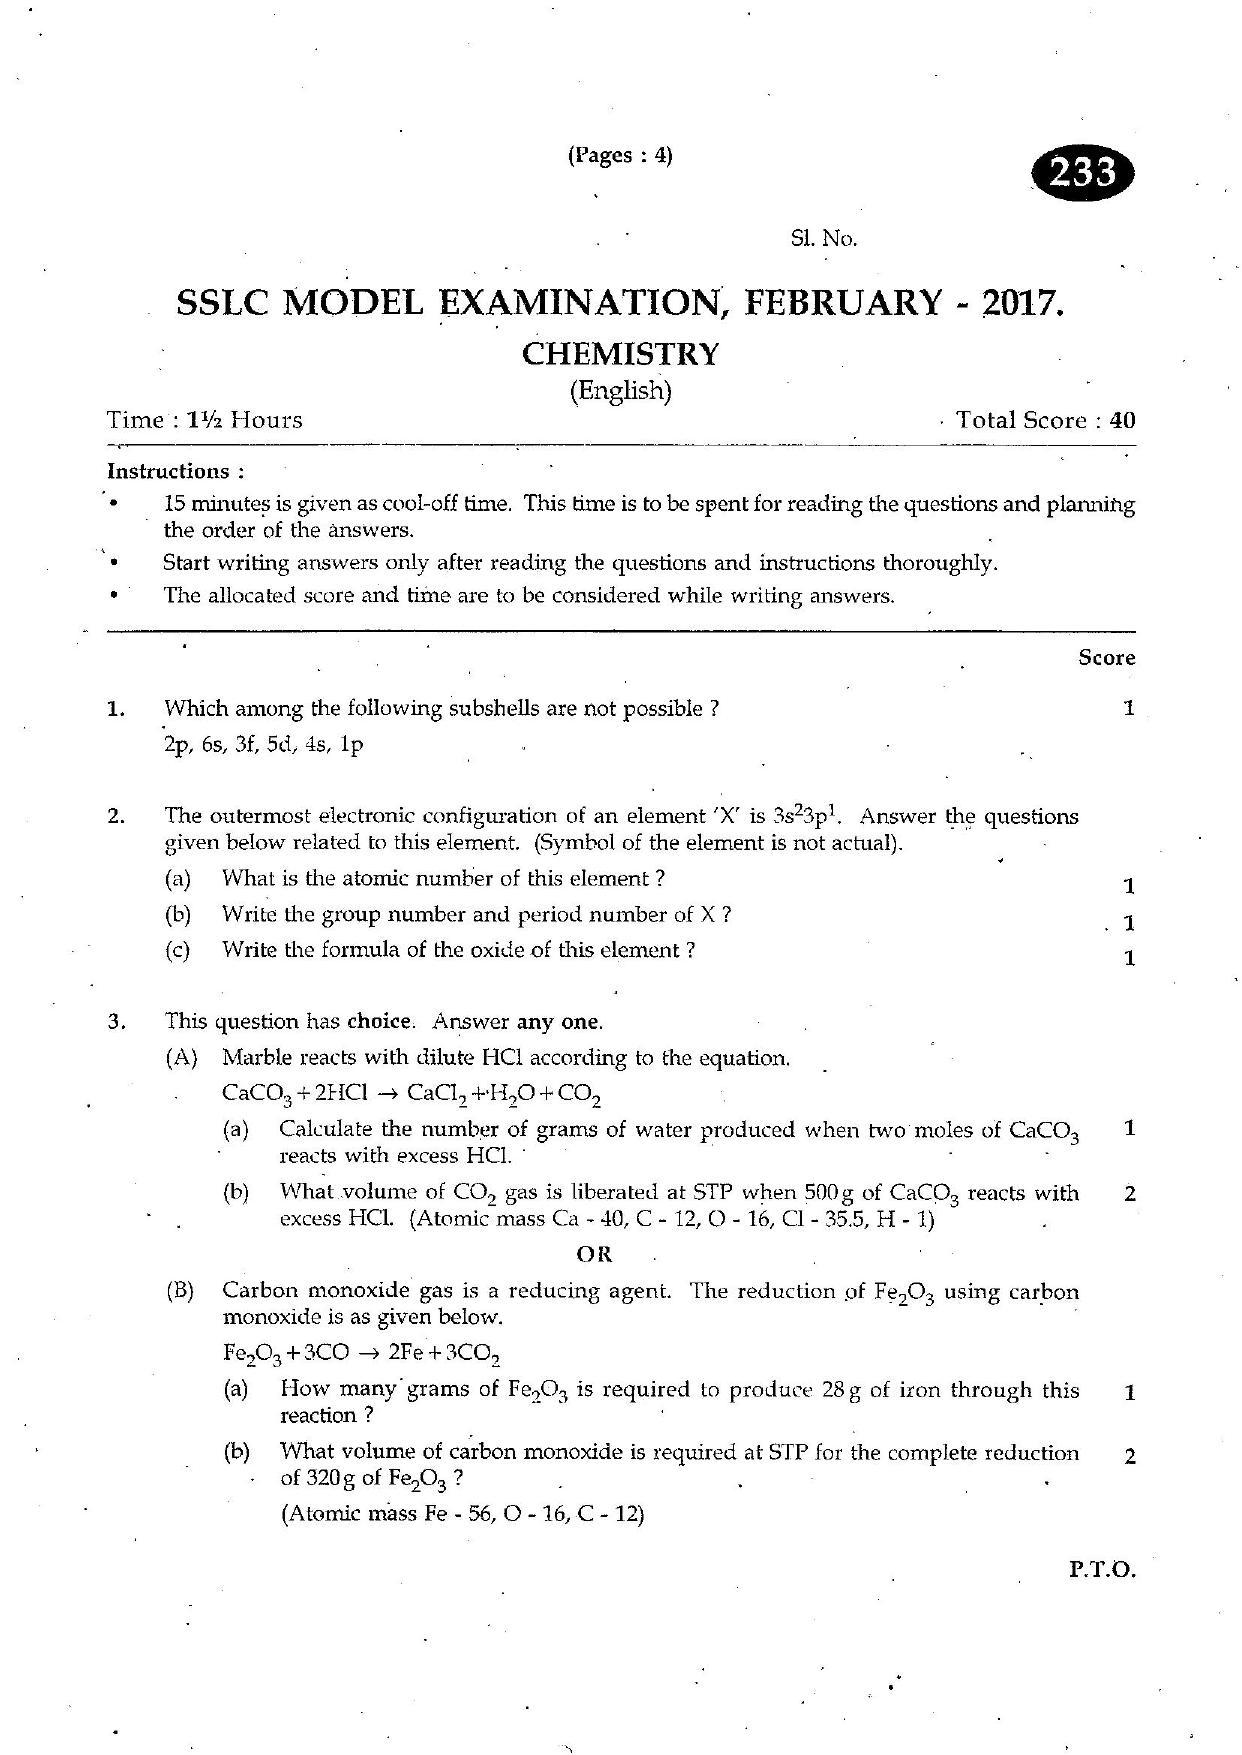 Kerala SSLC 2017 Chemistry Question paper (EM) (Model) - Page 1